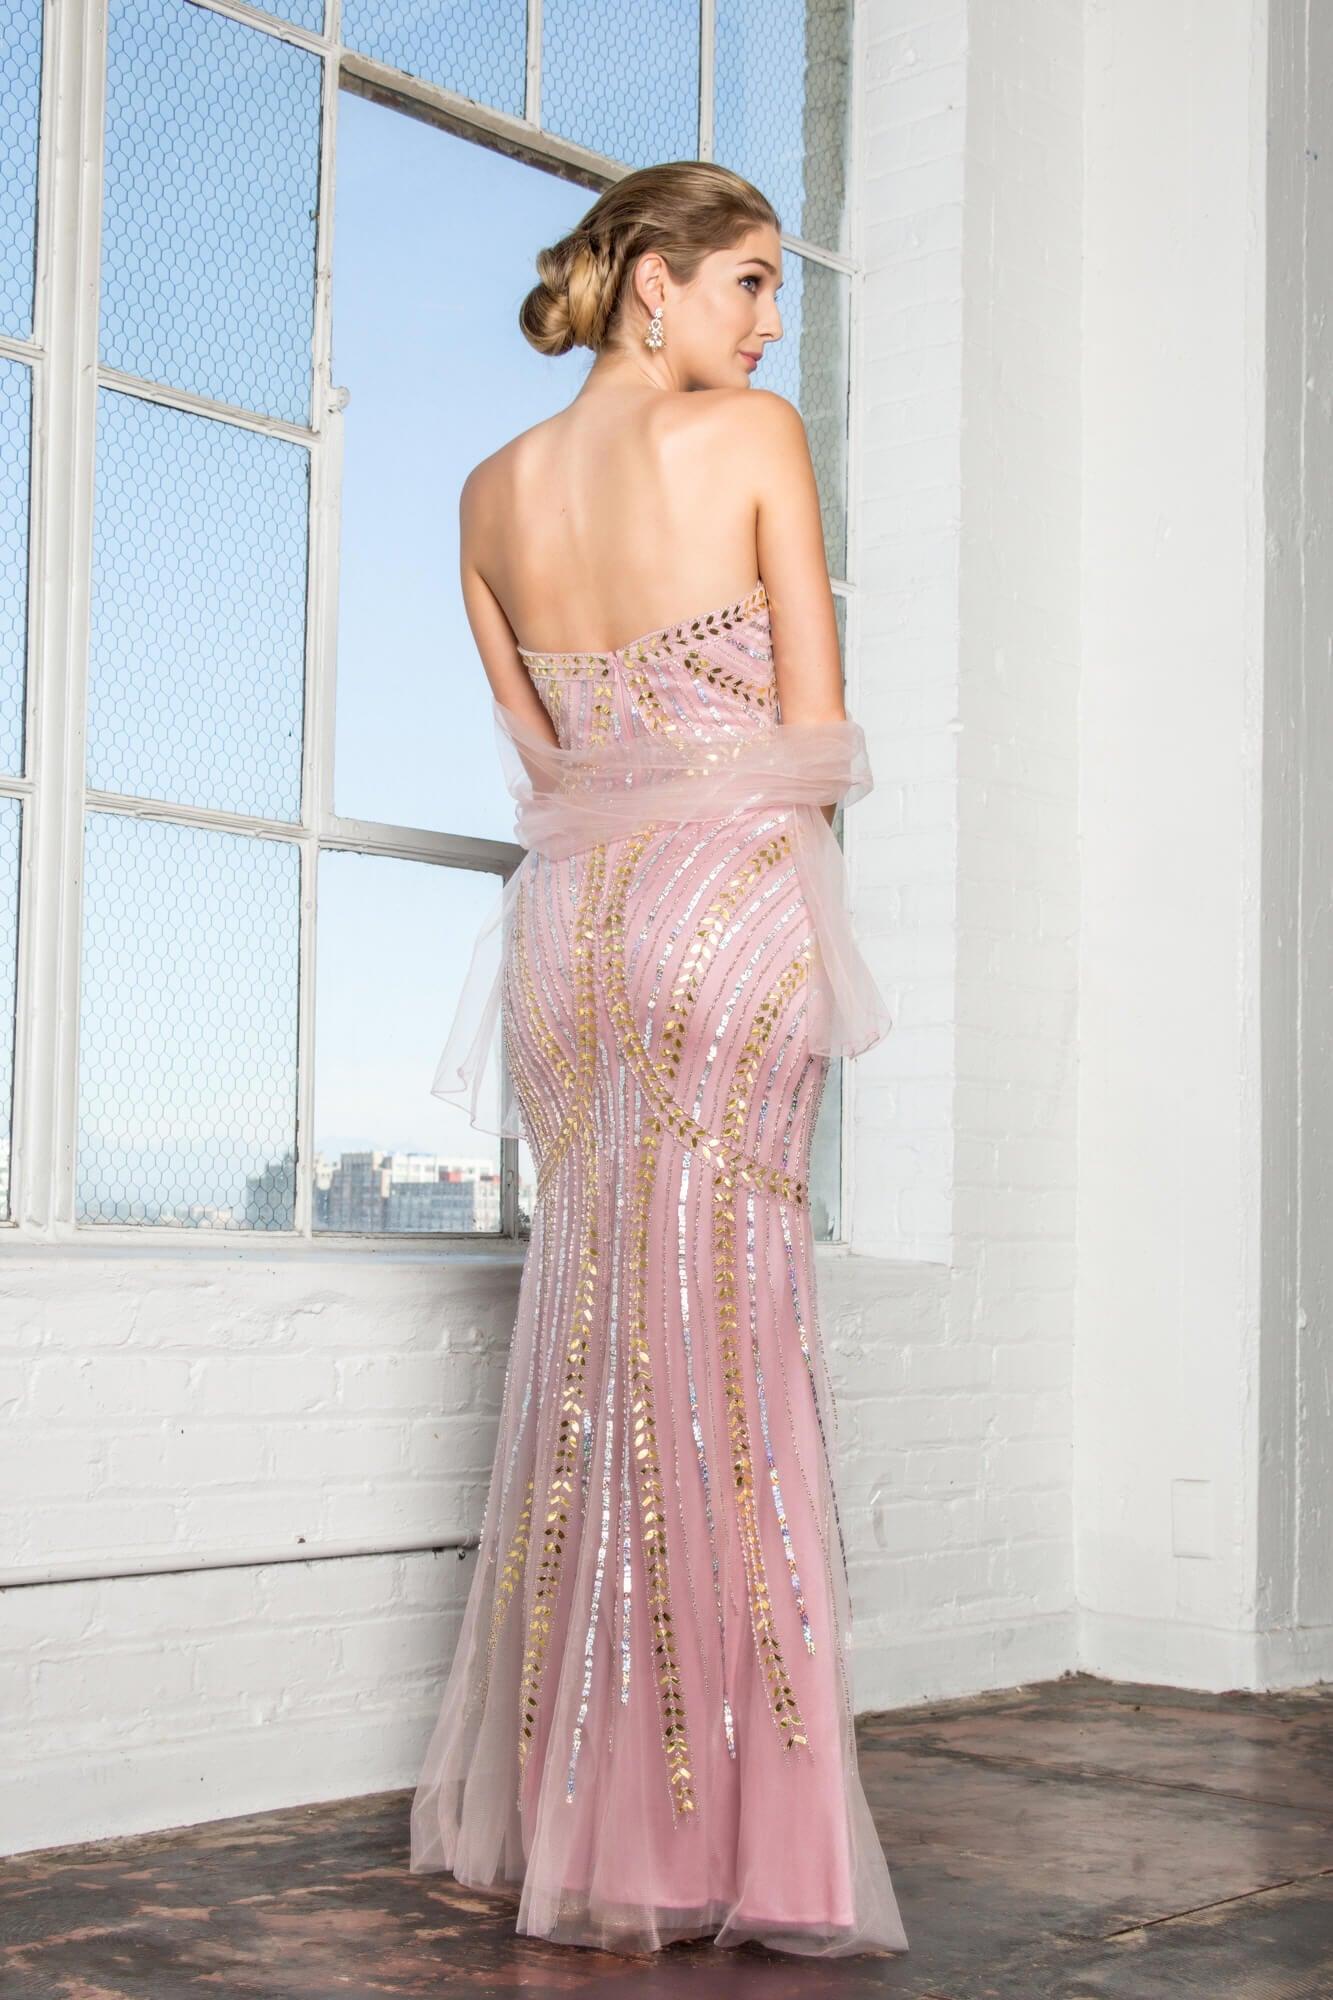 Prom Strapless Sweetheart Long Dress Formal Gown - The Dress Outlet Elizabeth K